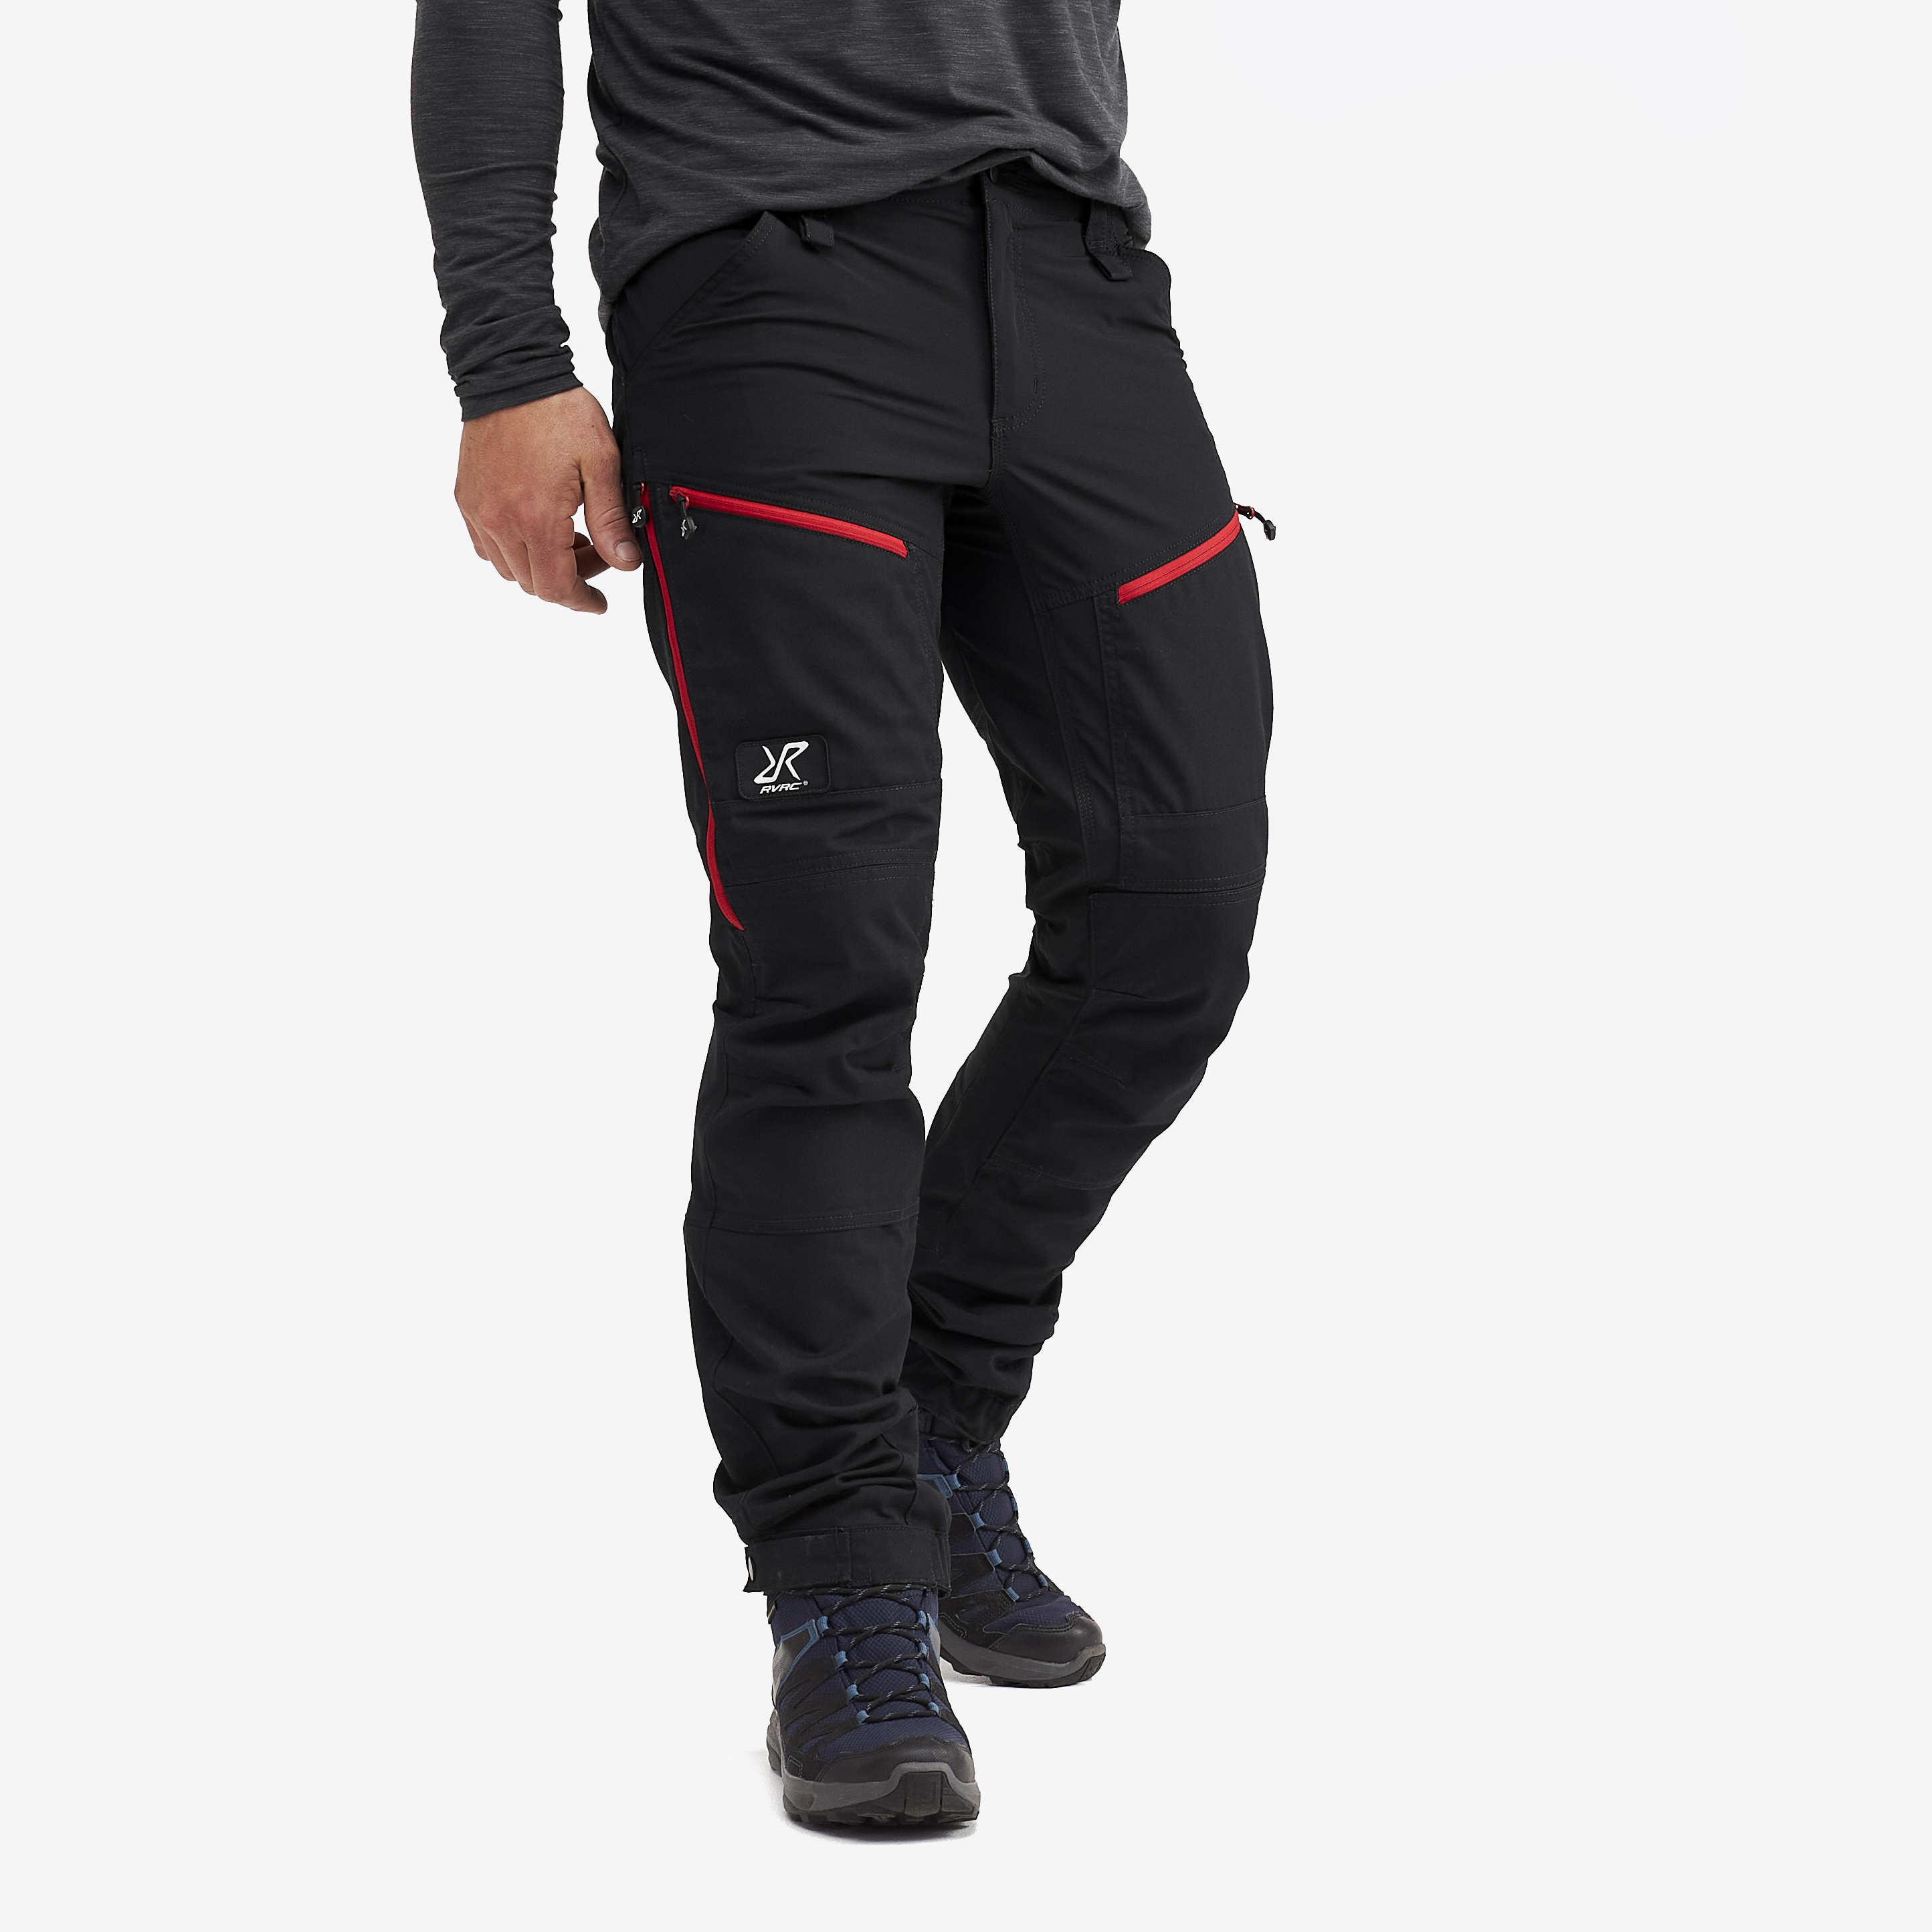 RVRC GP Pro hiking pants for men in black